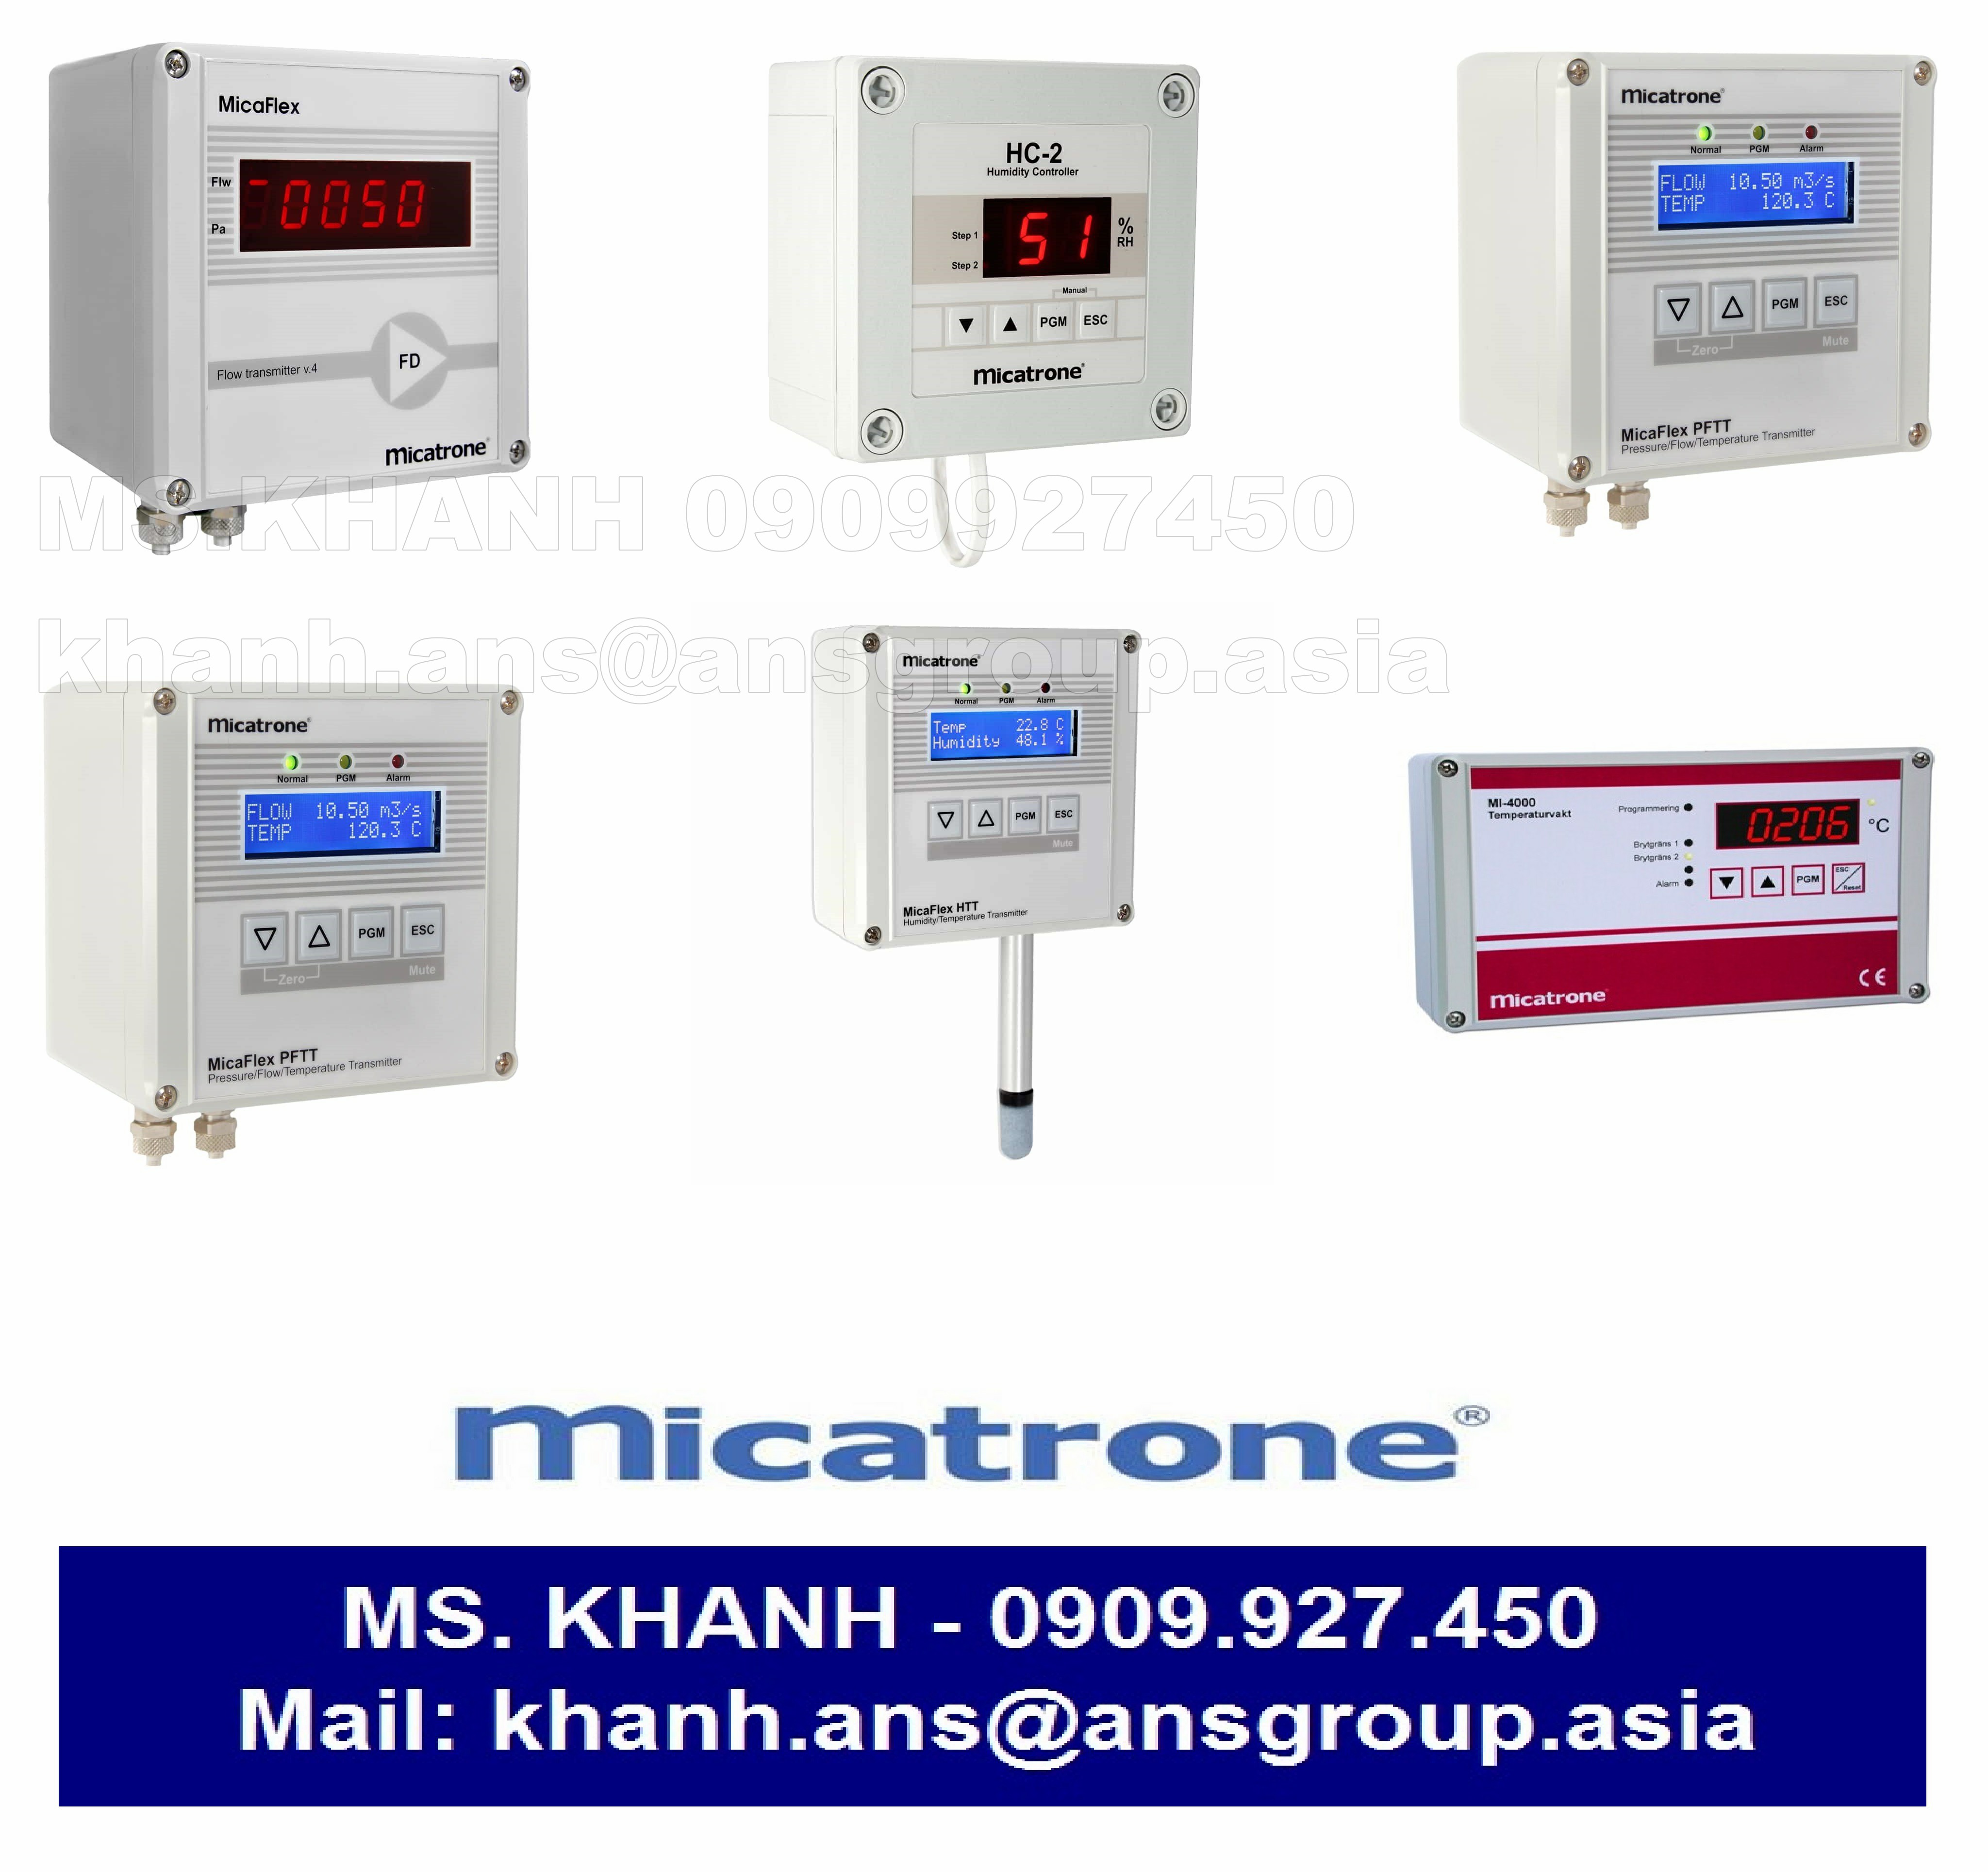 dau-do-60-5310-s-mfs-r-470-mi-c-mfs-r-470-micatrone-flow-probe-in-aluminum-micatrone-vietnam.png